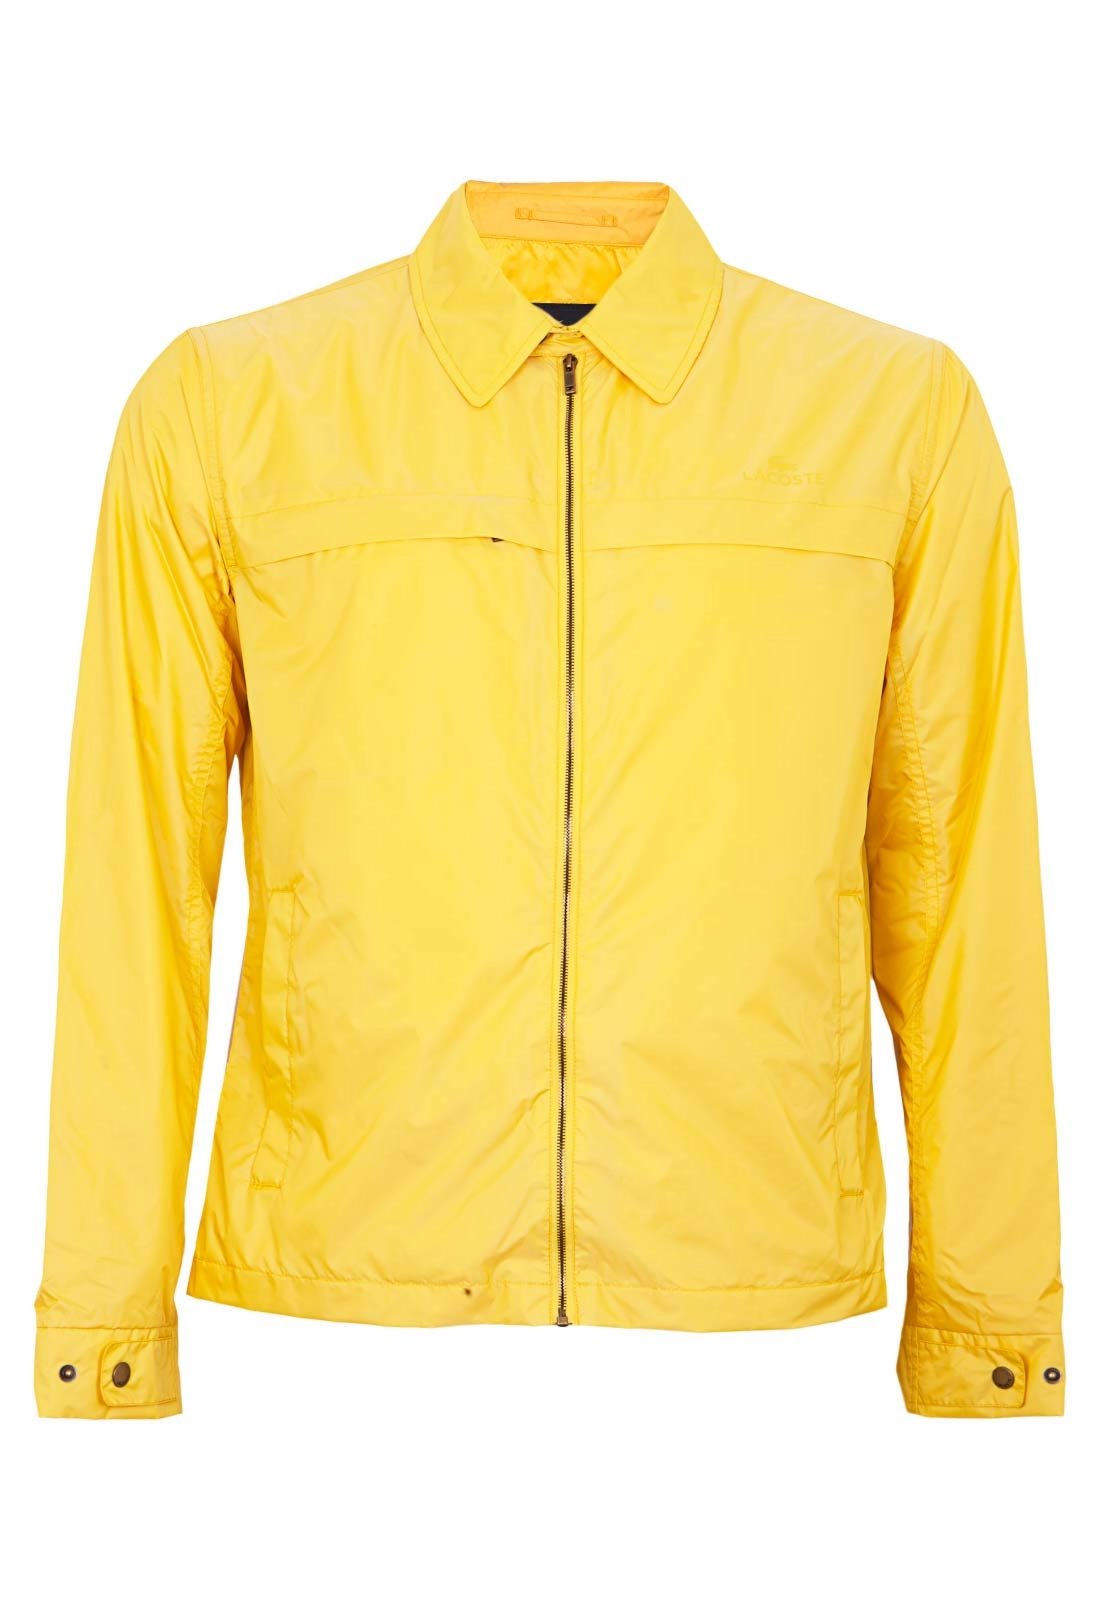 jaqueta jeans amarela masculina